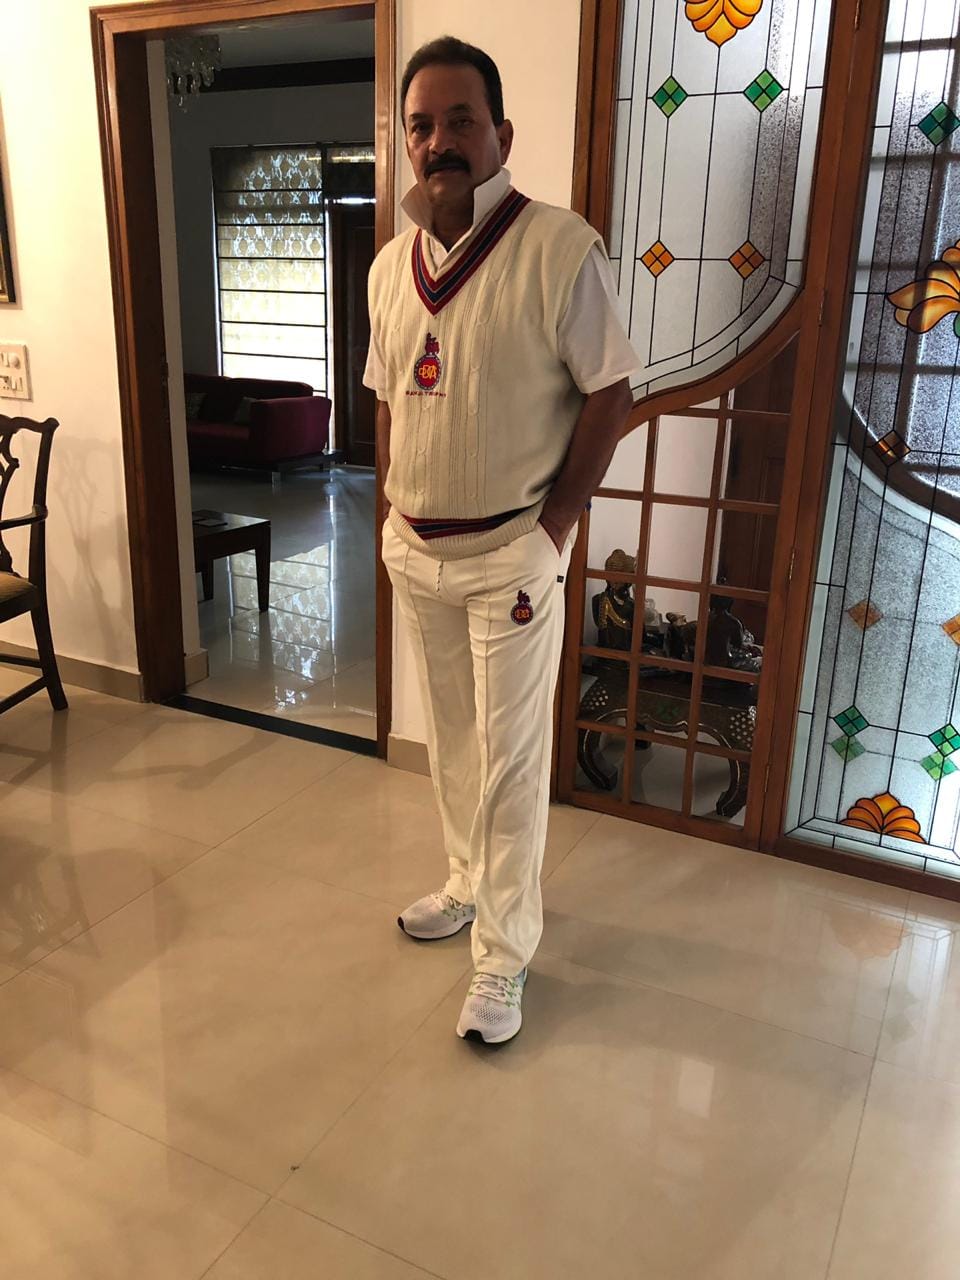 Madan Lal in white uniform